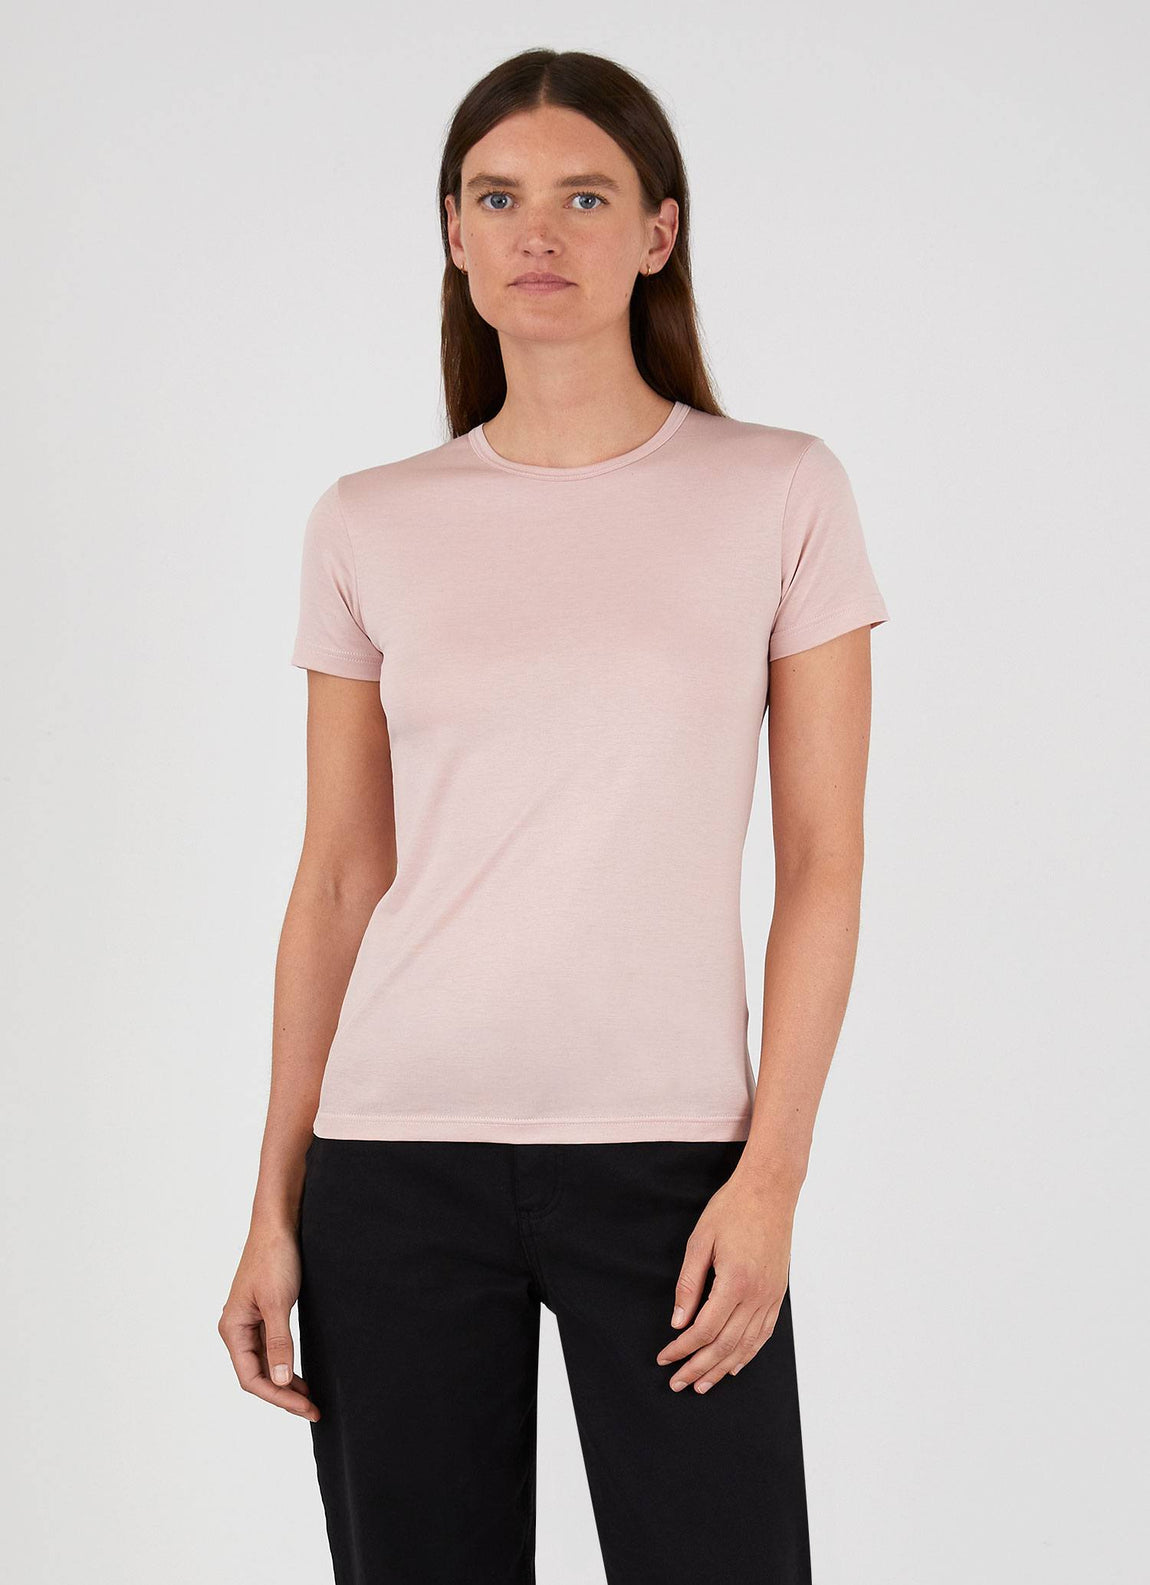 Women's Classic T-shirt in Shell Pink